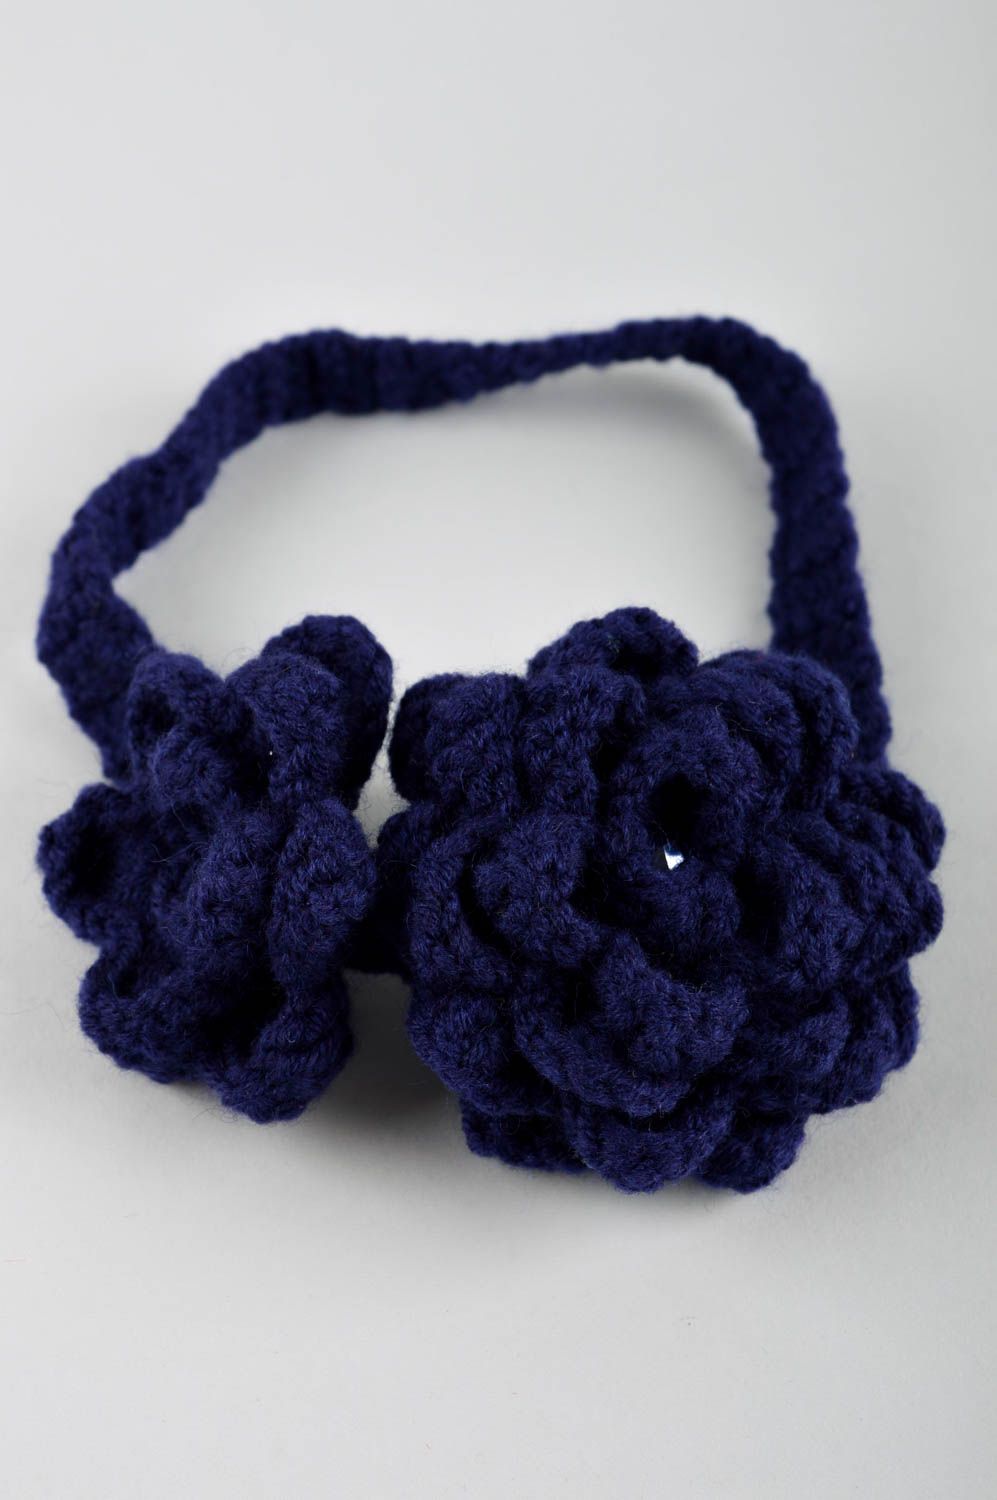 Handmade headband designer acessory gift ideas knitted hedband for girls photo 5